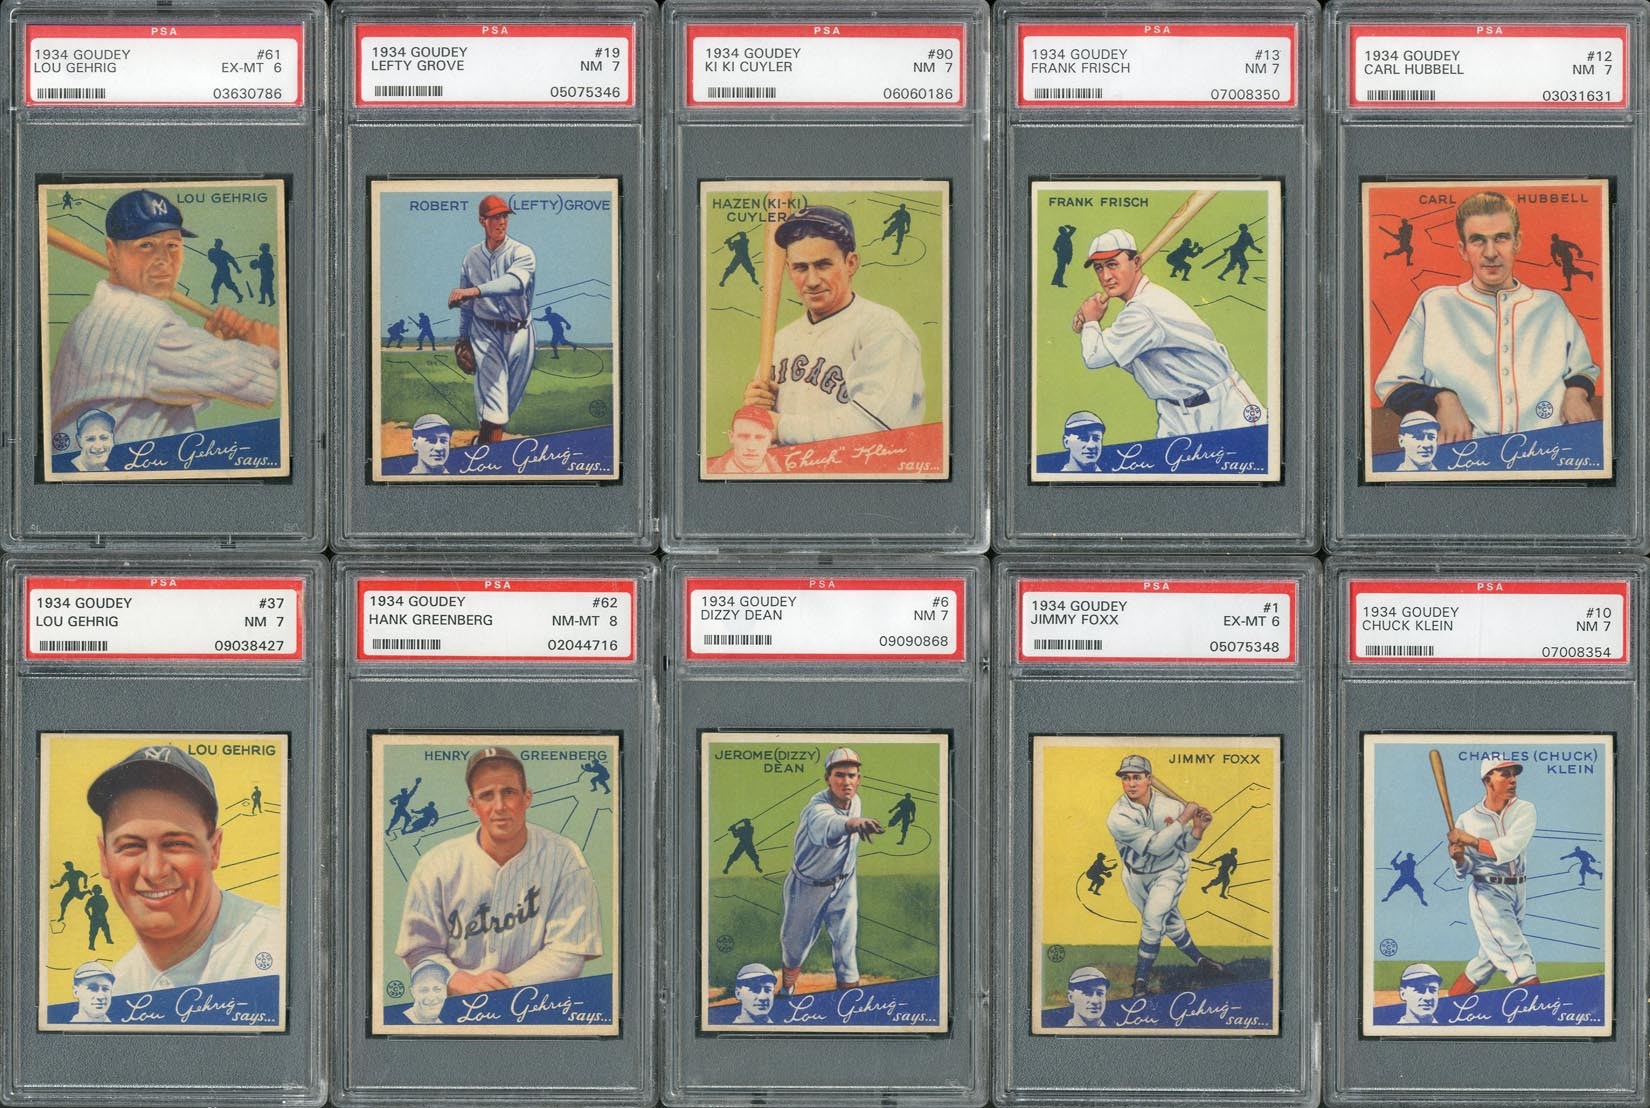 Baseball and Trading Cards - High Grade 1934 Goudey PSA Graded Complete Set - PSA 8 Greenberg RC (#8 on PSA Registry)